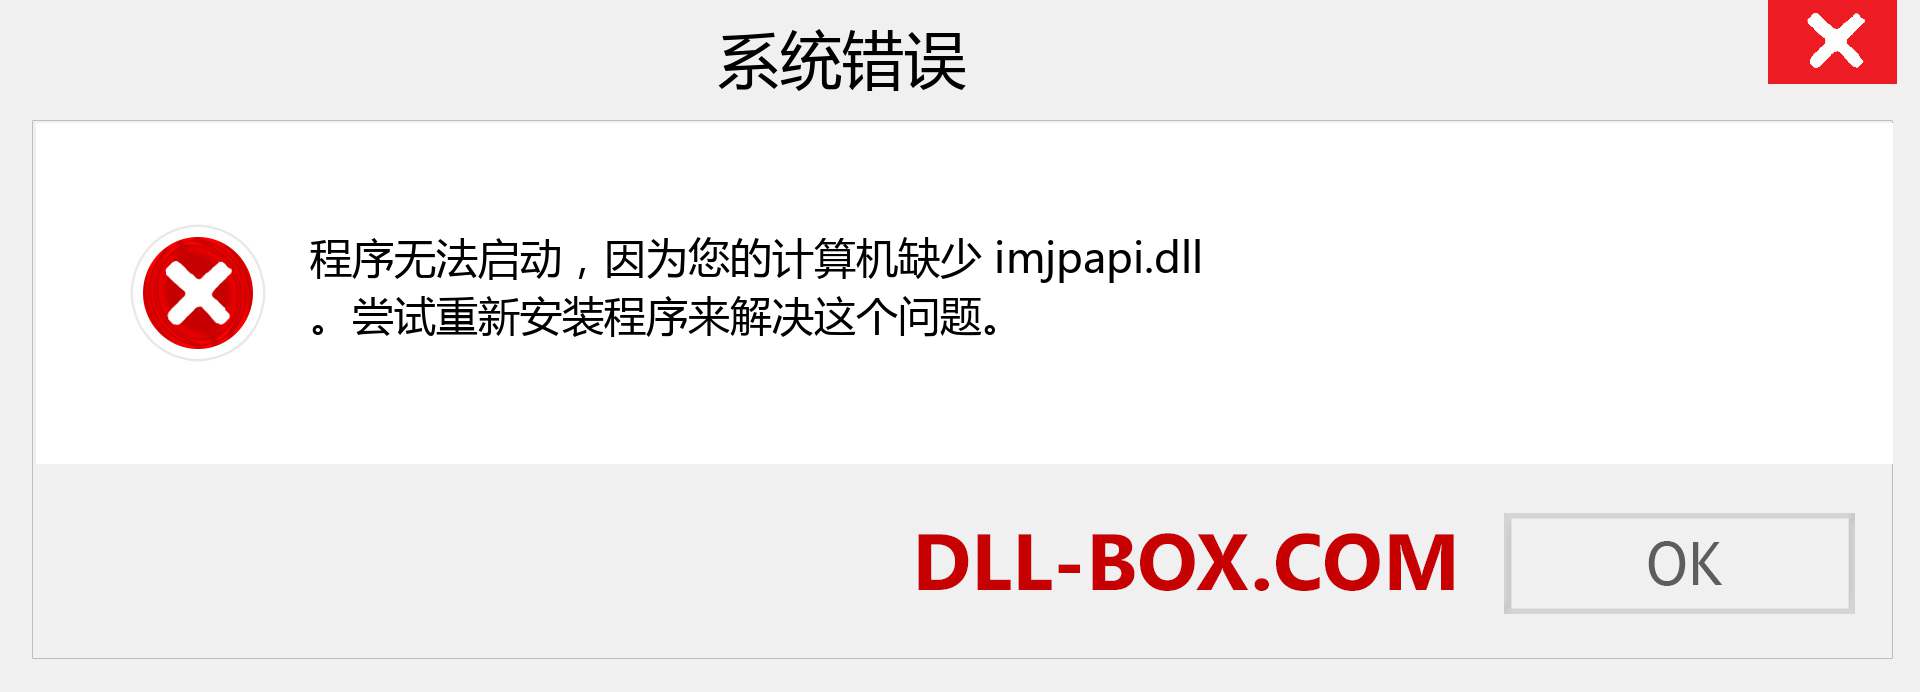 imjpapi.dll 文件丢失？。 适用于 Windows 7、8、10 的下载 - 修复 Windows、照片、图像上的 imjpapi dll 丢失错误